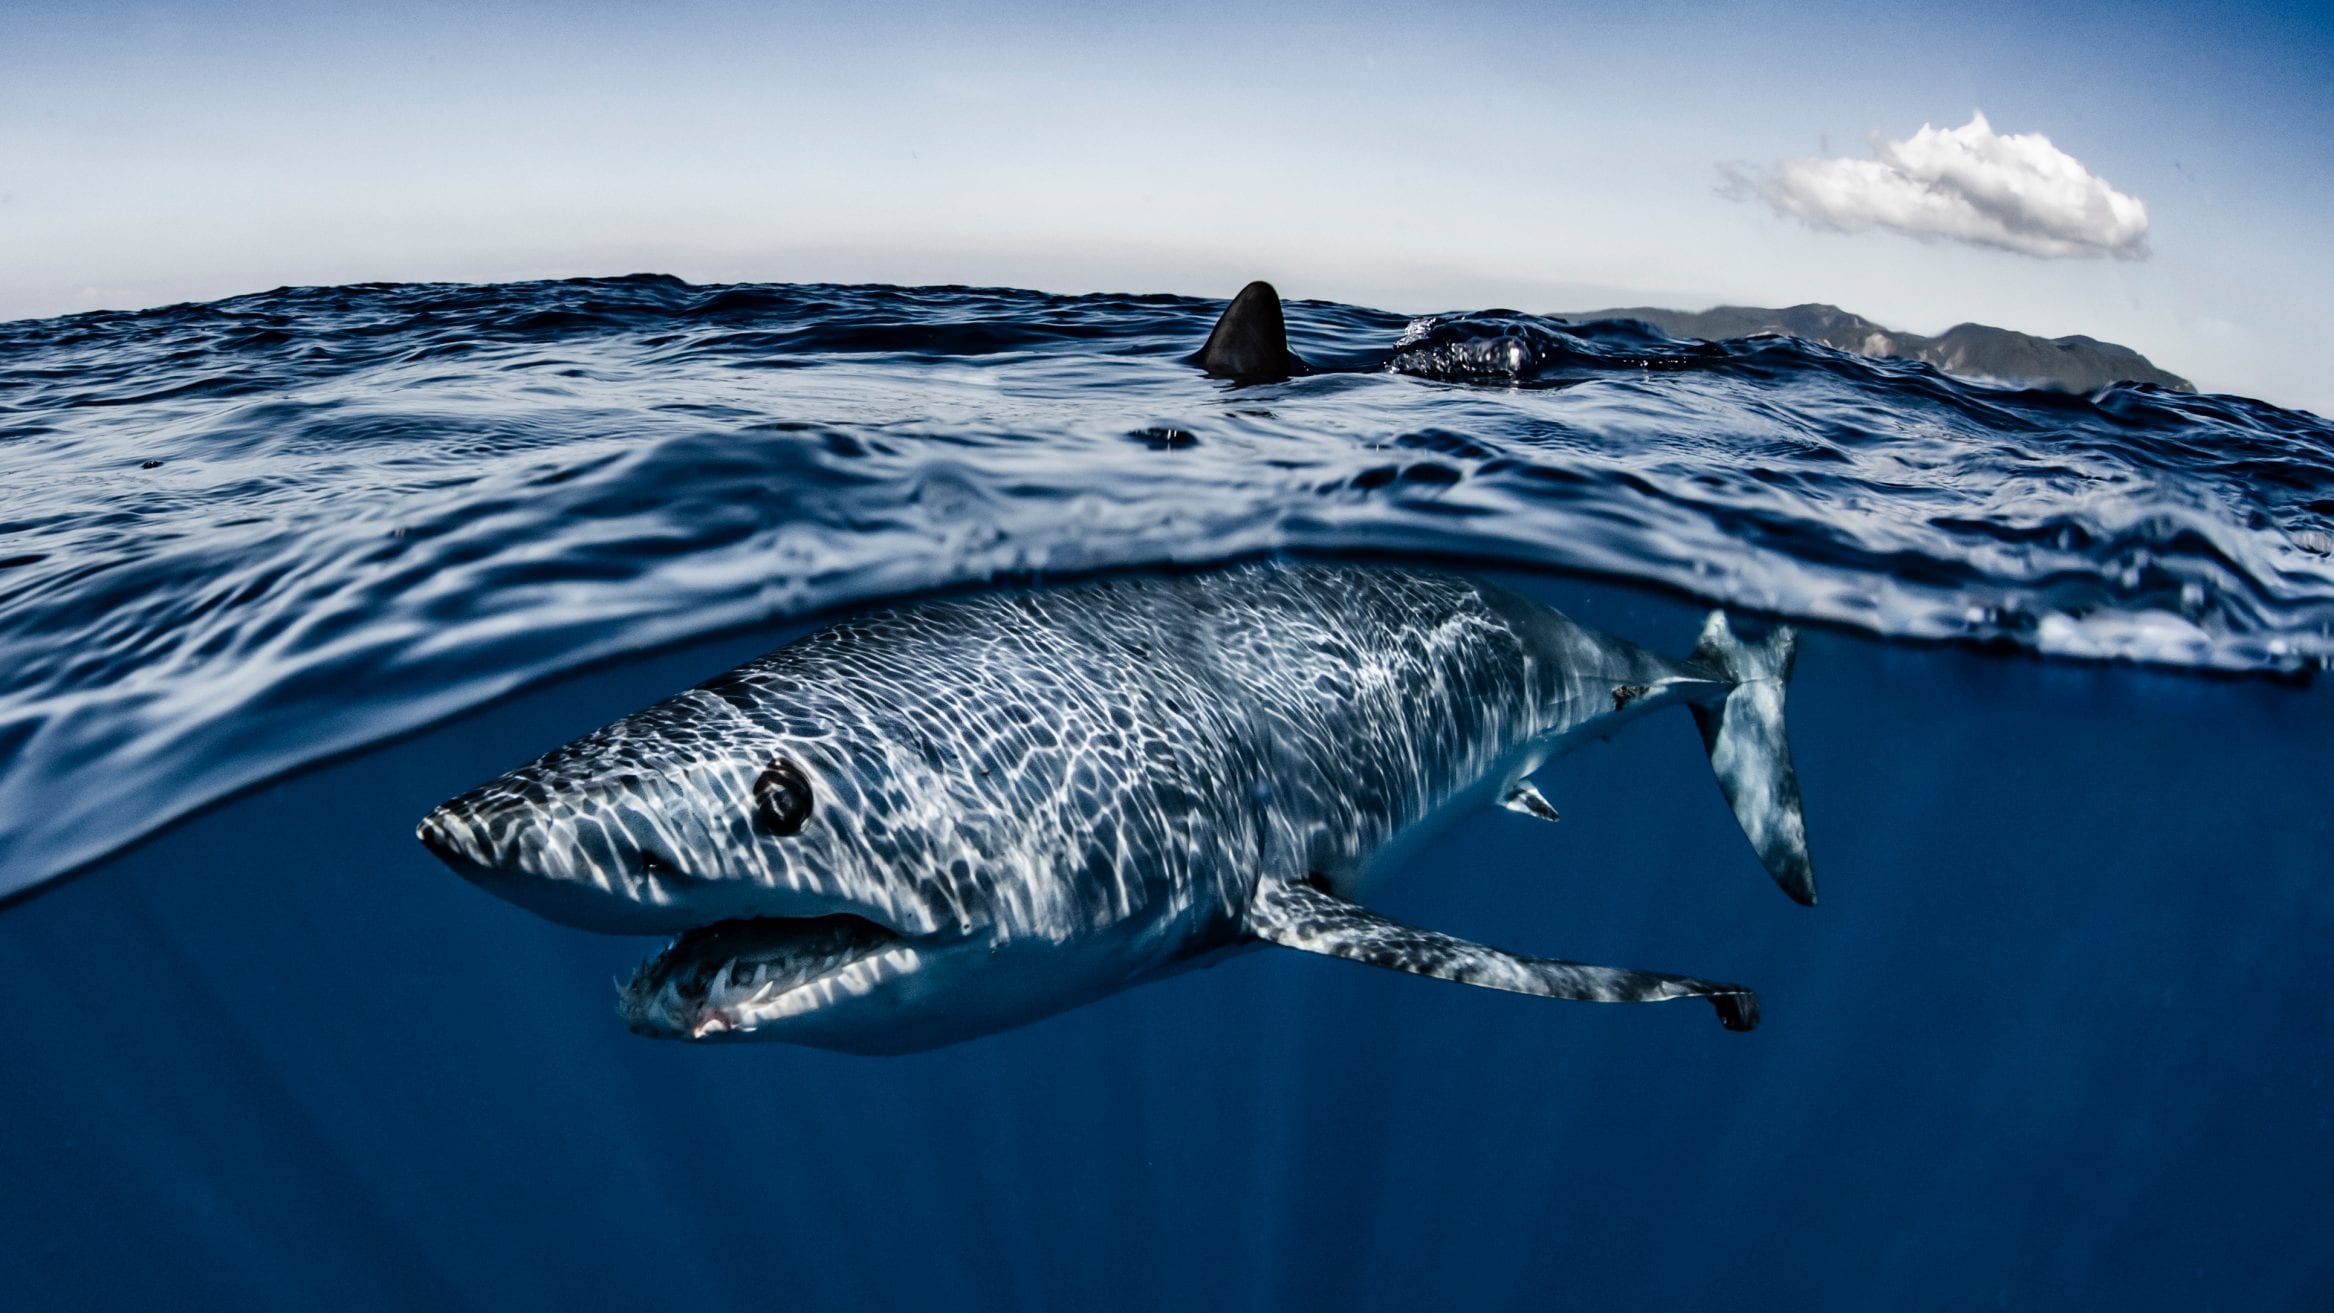 Vital Protections For Endangered Mako Shark Blocked At Iccat